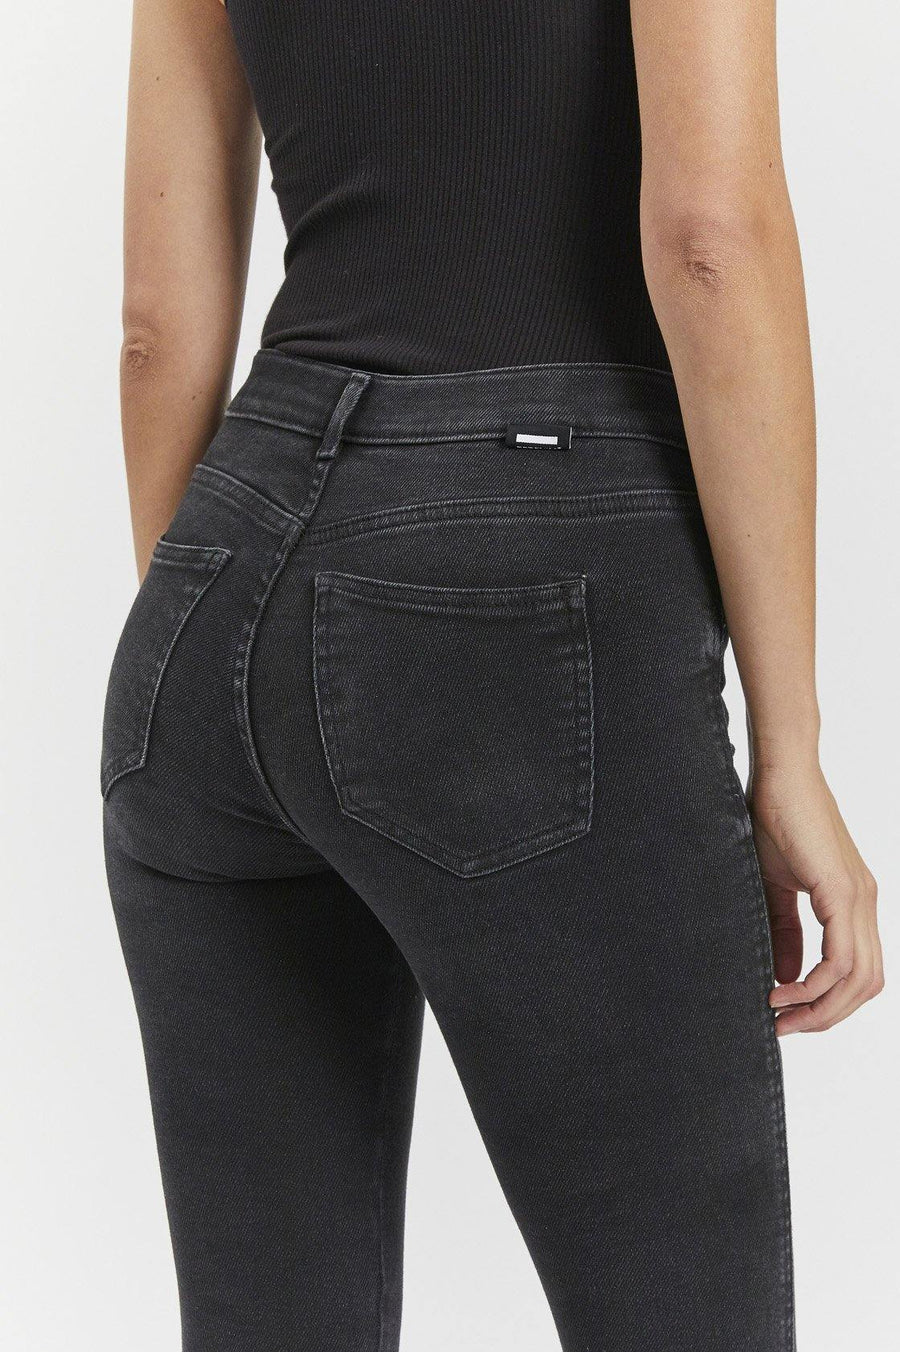 Lexy Jeans - Black Mist - Dr Denim Jeans - Australia & NZ